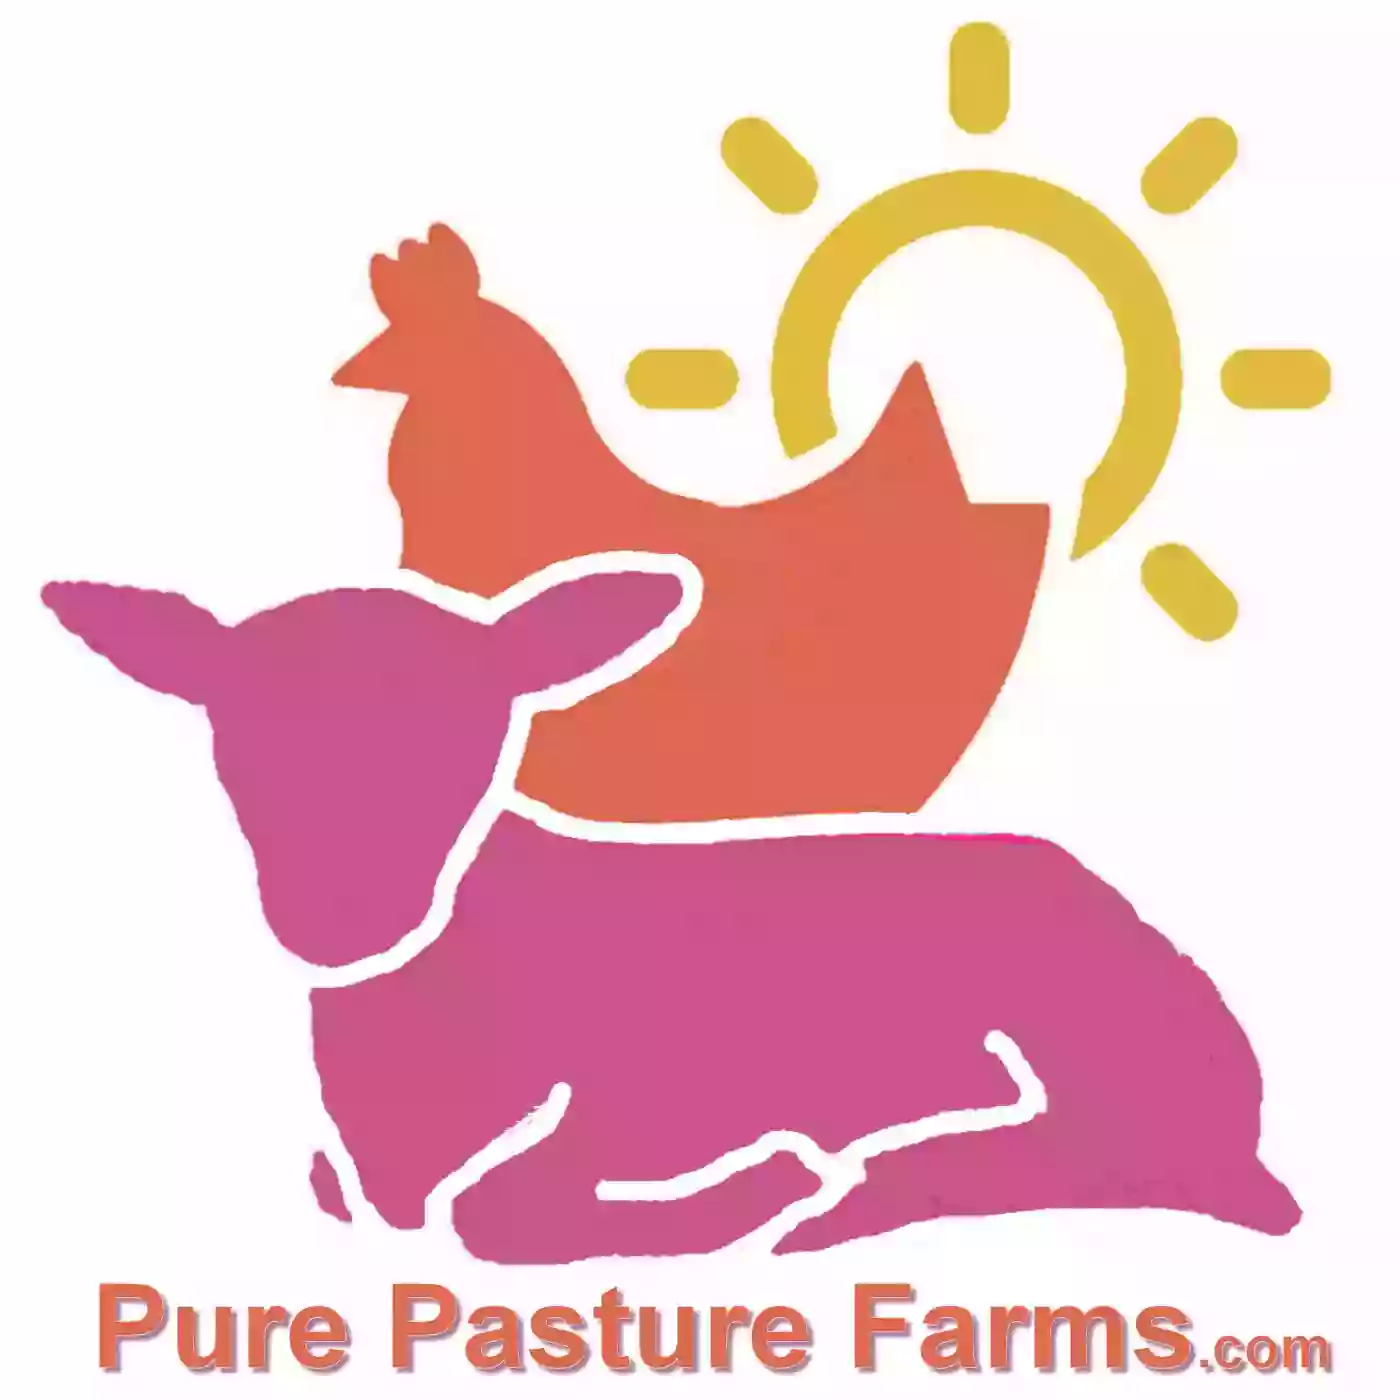 Pure Pasture Farms at Richland Park